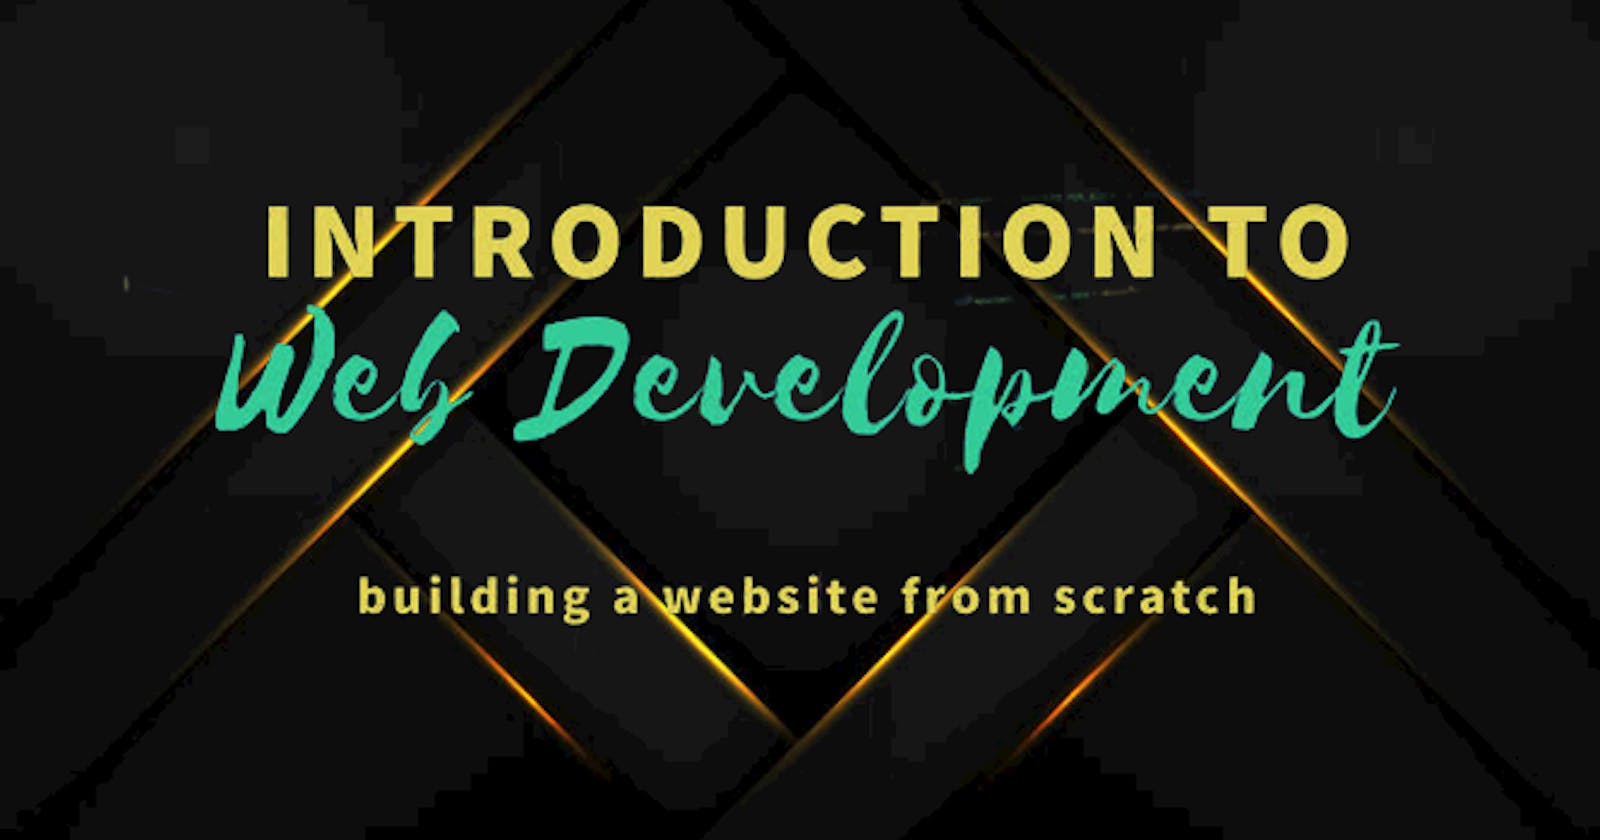 Introduction of  Web development.